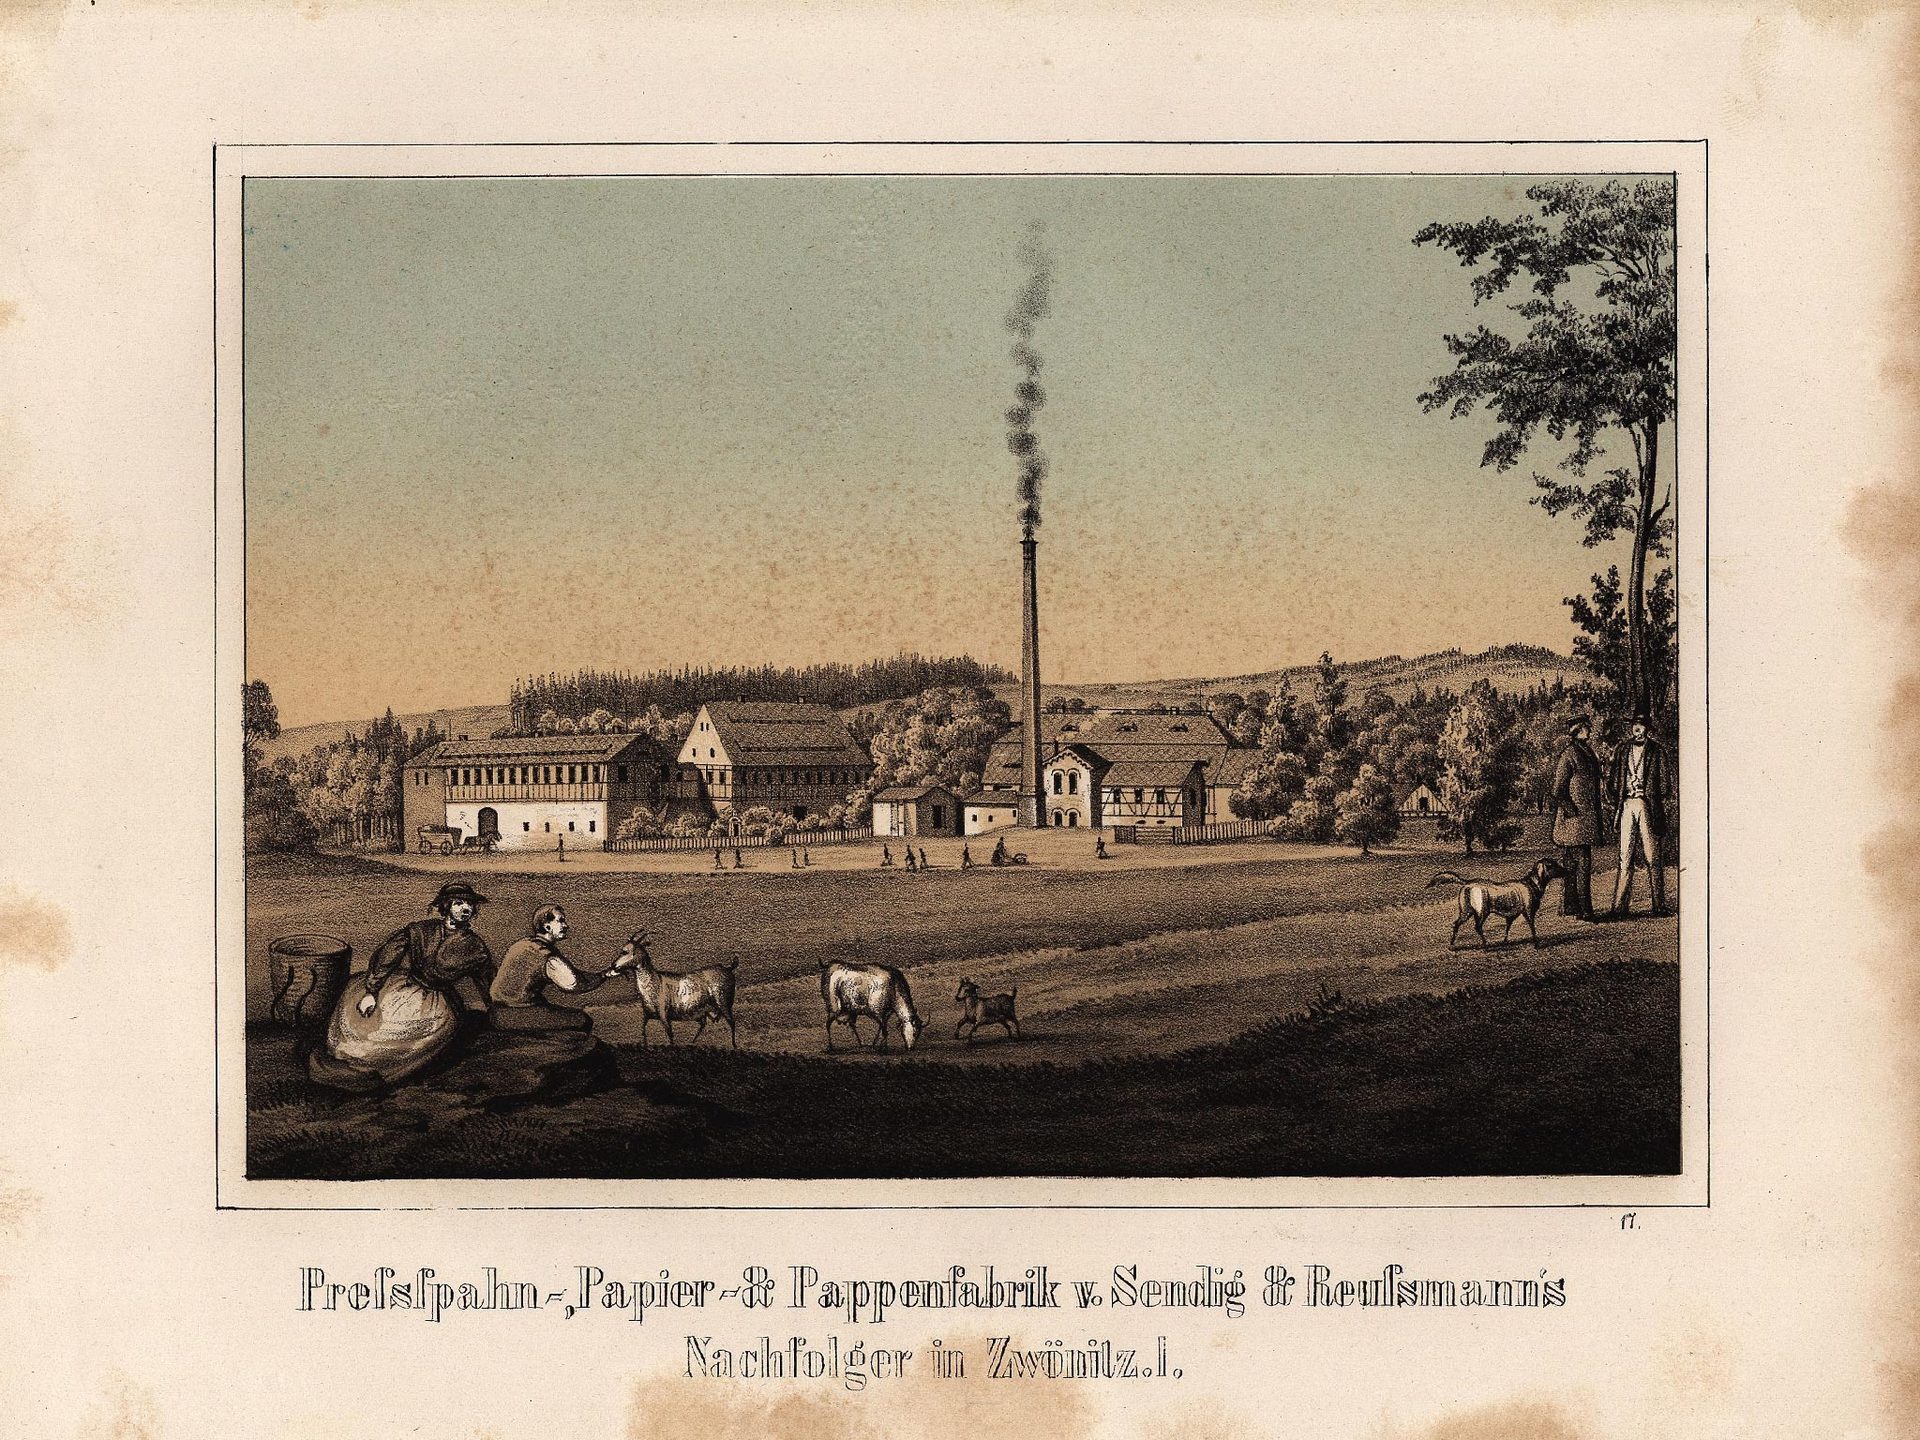 Preßspahn-, Papier- u. Pappenfabrik v. Sendig &amp; Reußmann’s Nachfolger in Zwönitz I